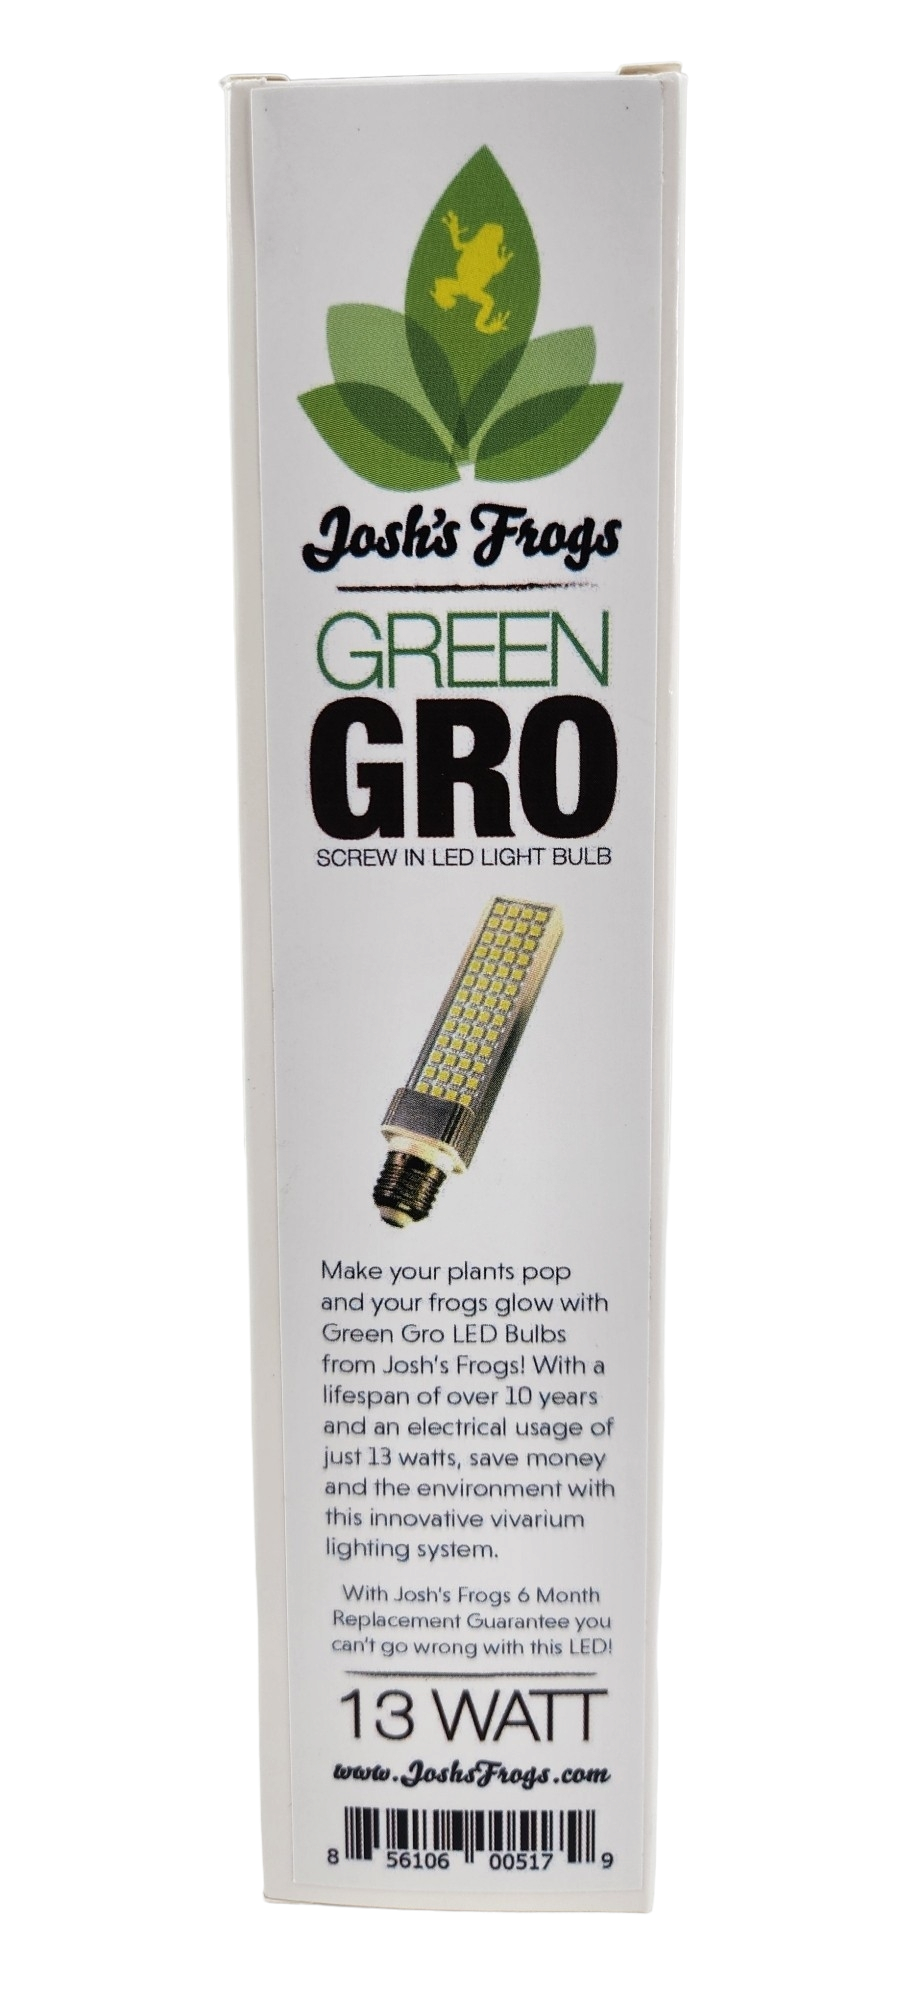 Josh's Frogs Green Gro LED Bulb (13 Watt)